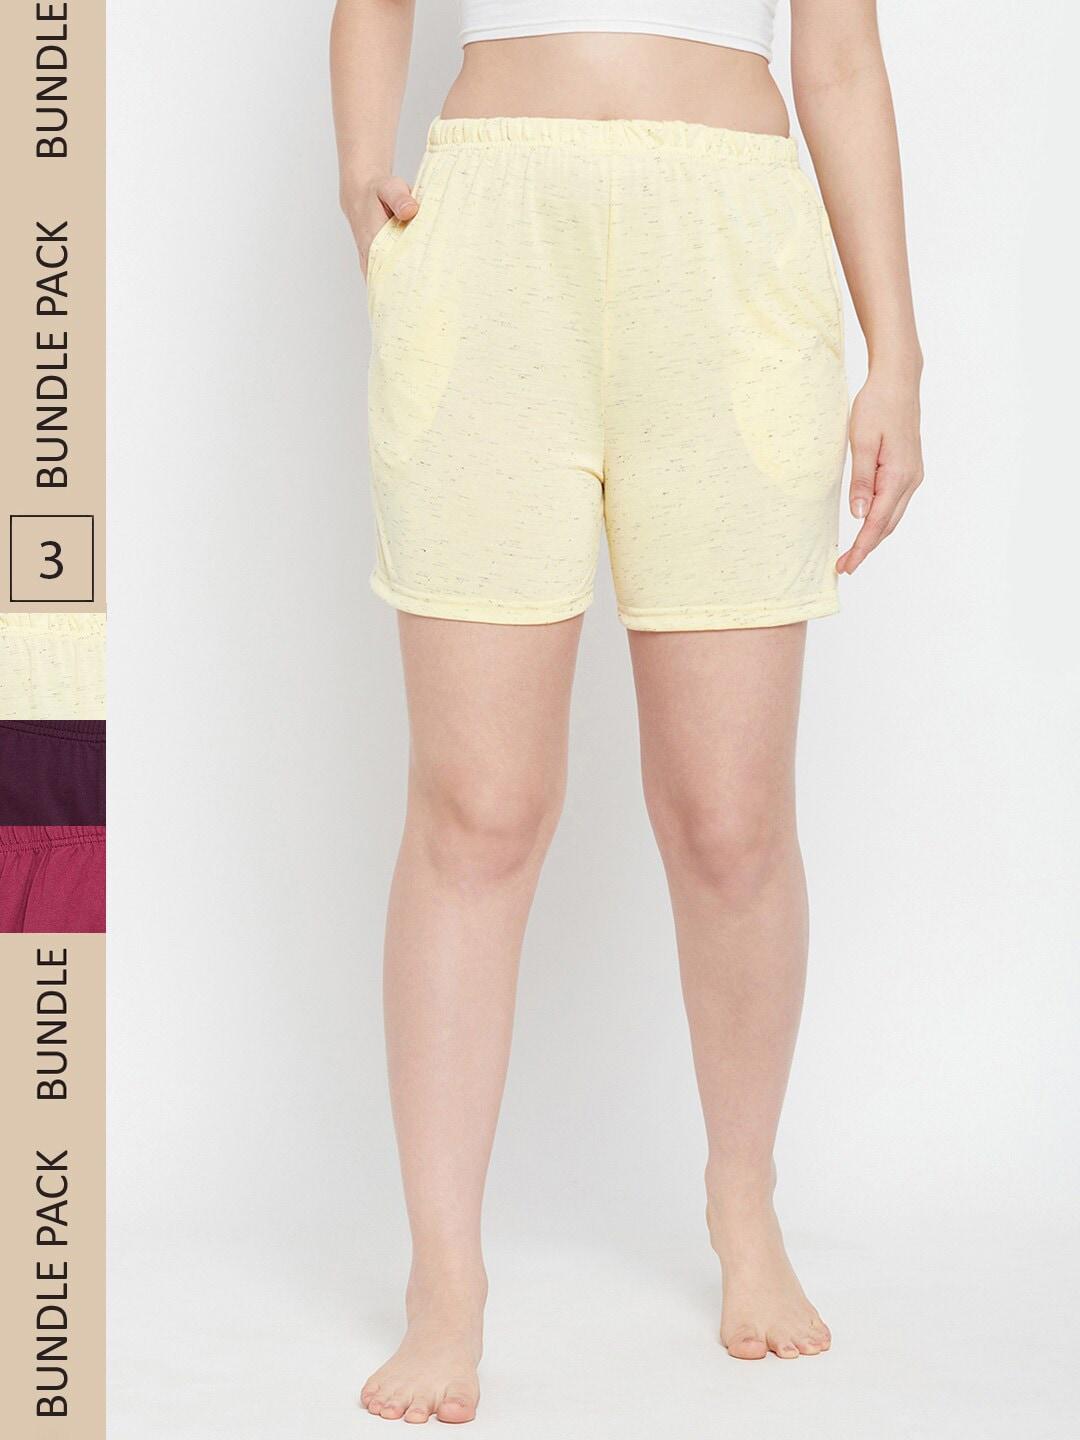 clovia-women-pack-of-3-mid-rise-cotton-lounge-shorts